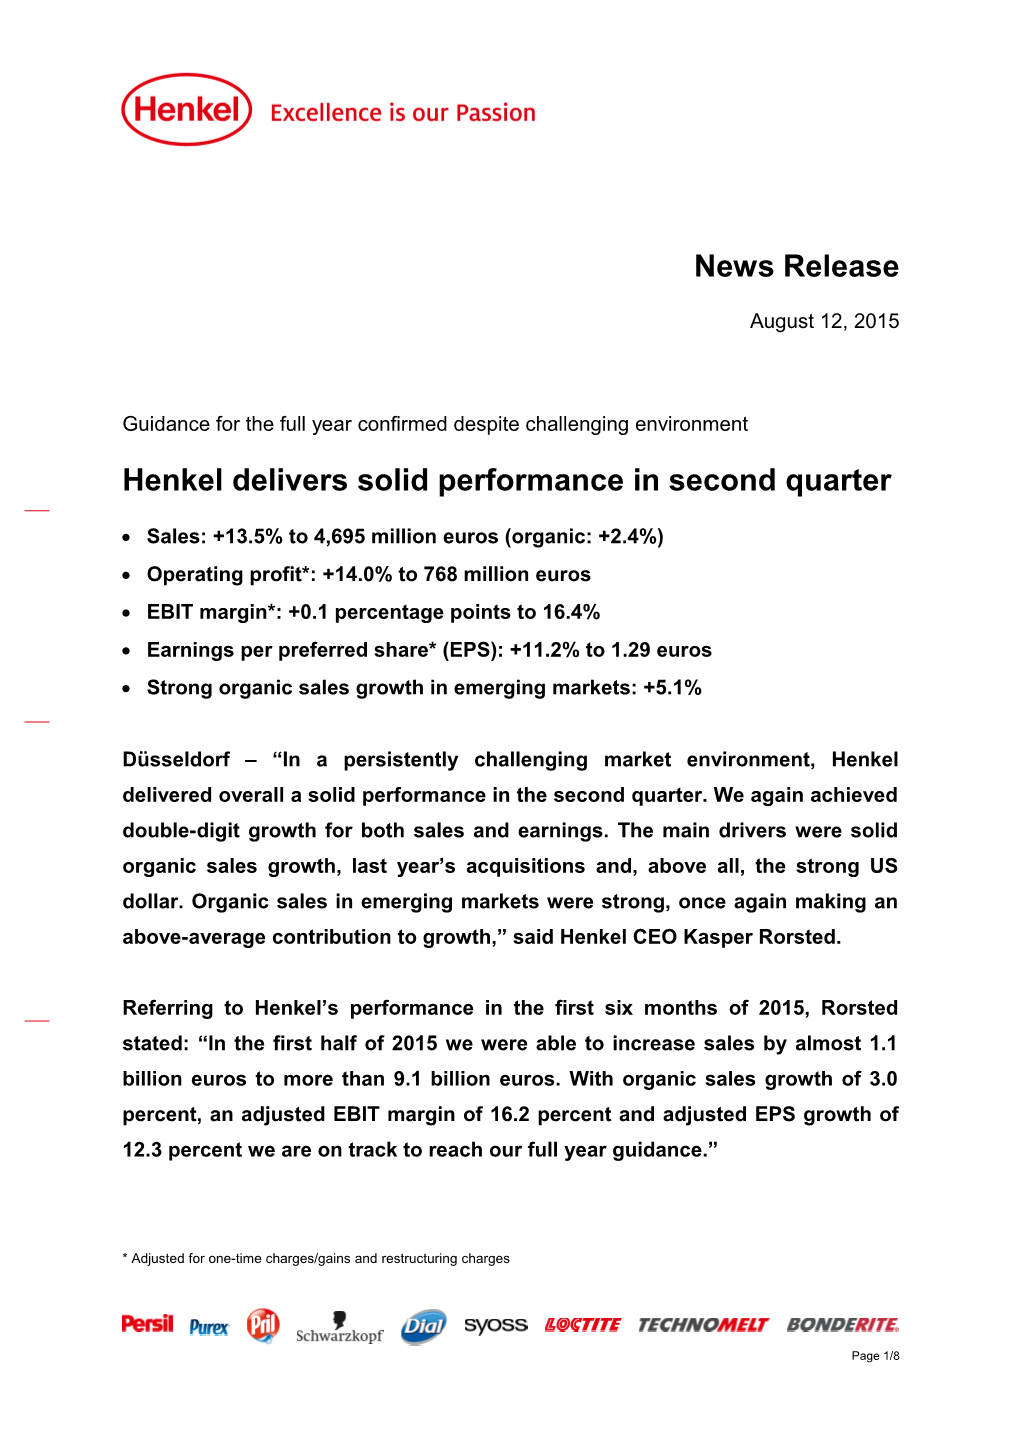 Henkel Delivers Solid Performance in Second Quarter